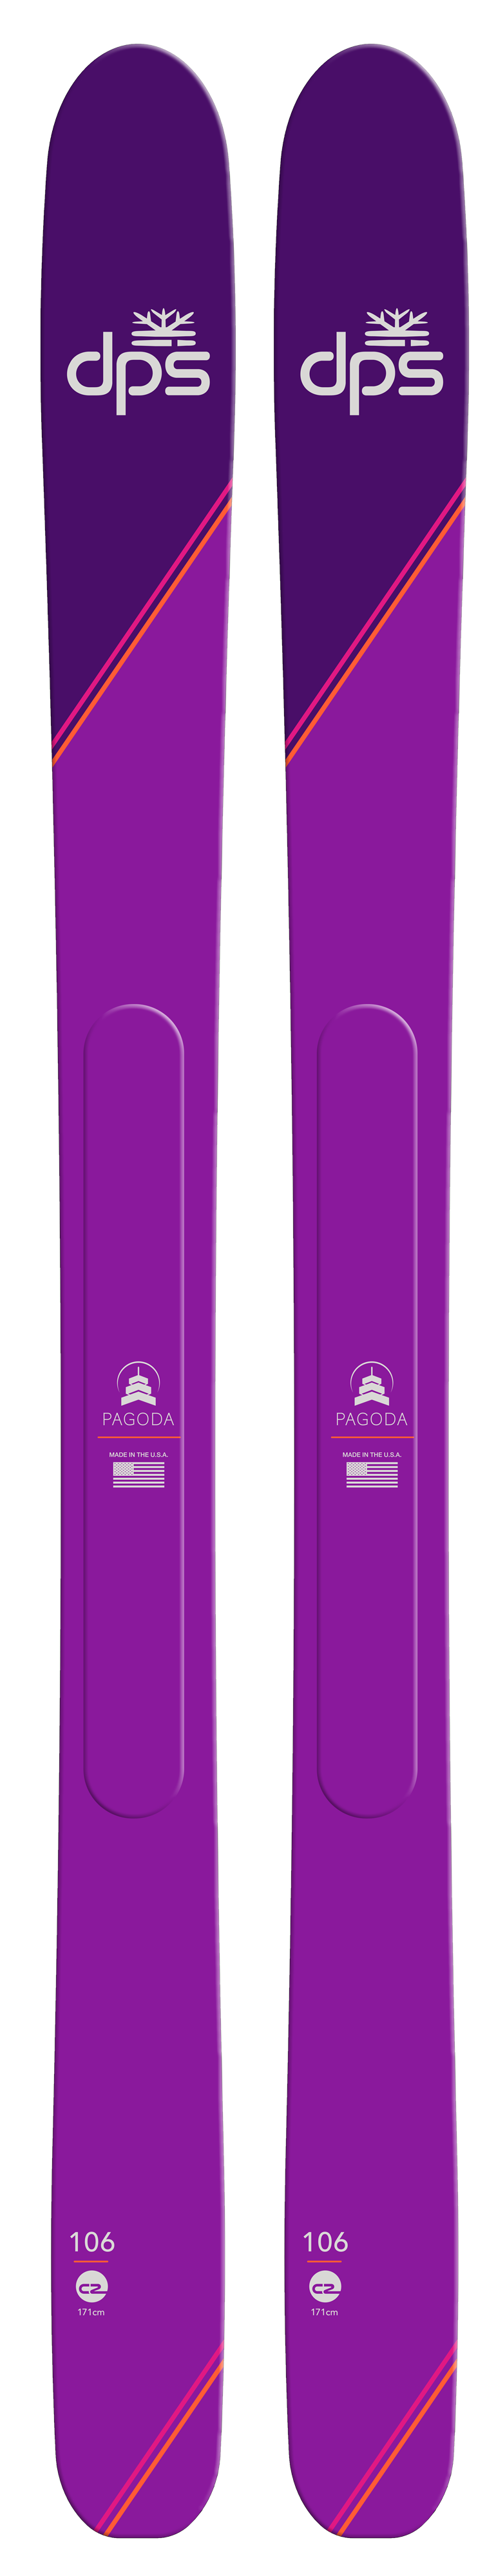 topsheet of DPS purple pagoda 106 c2 skis